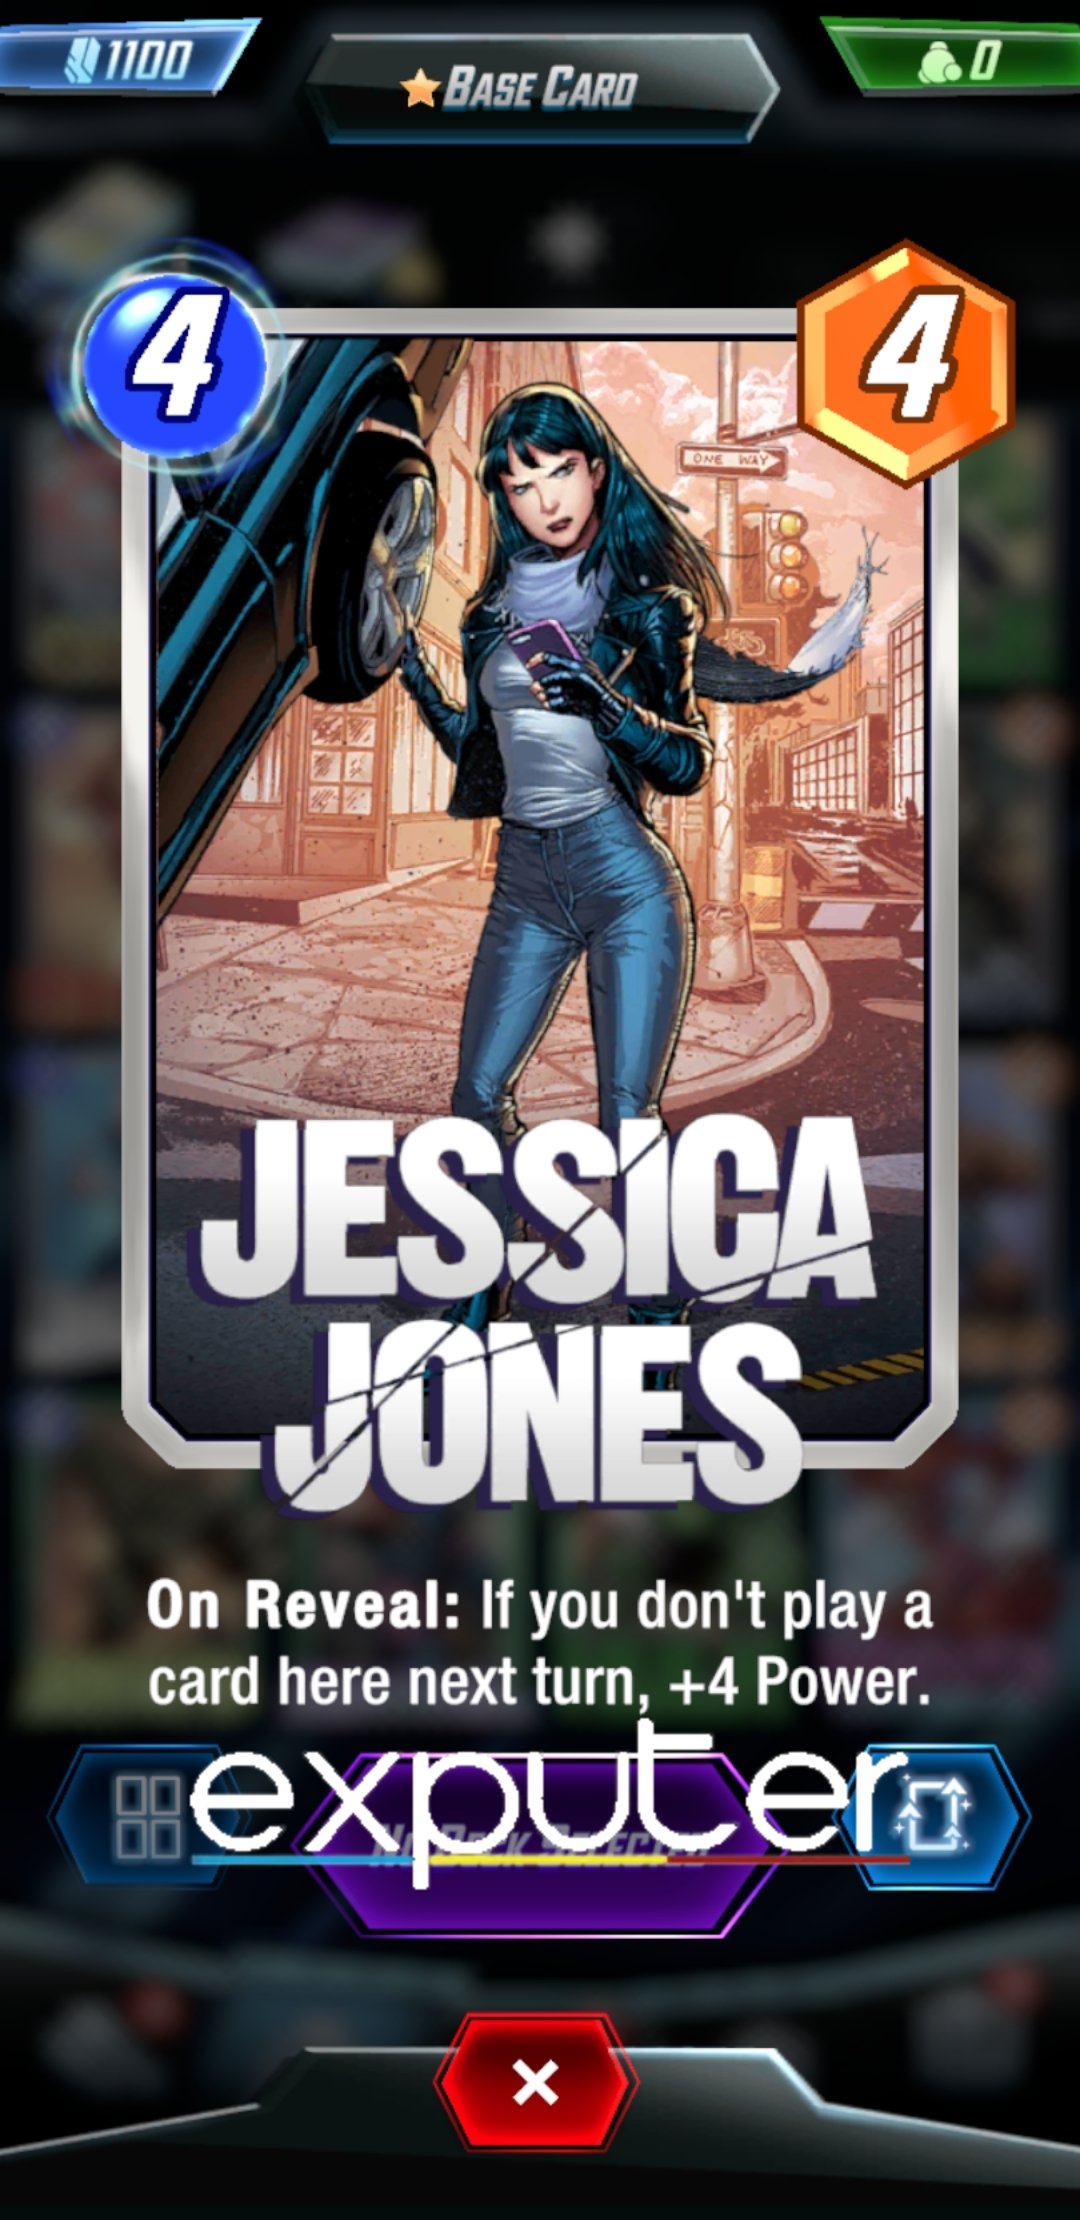 Jessica Jones starting card in Marvel Snap 